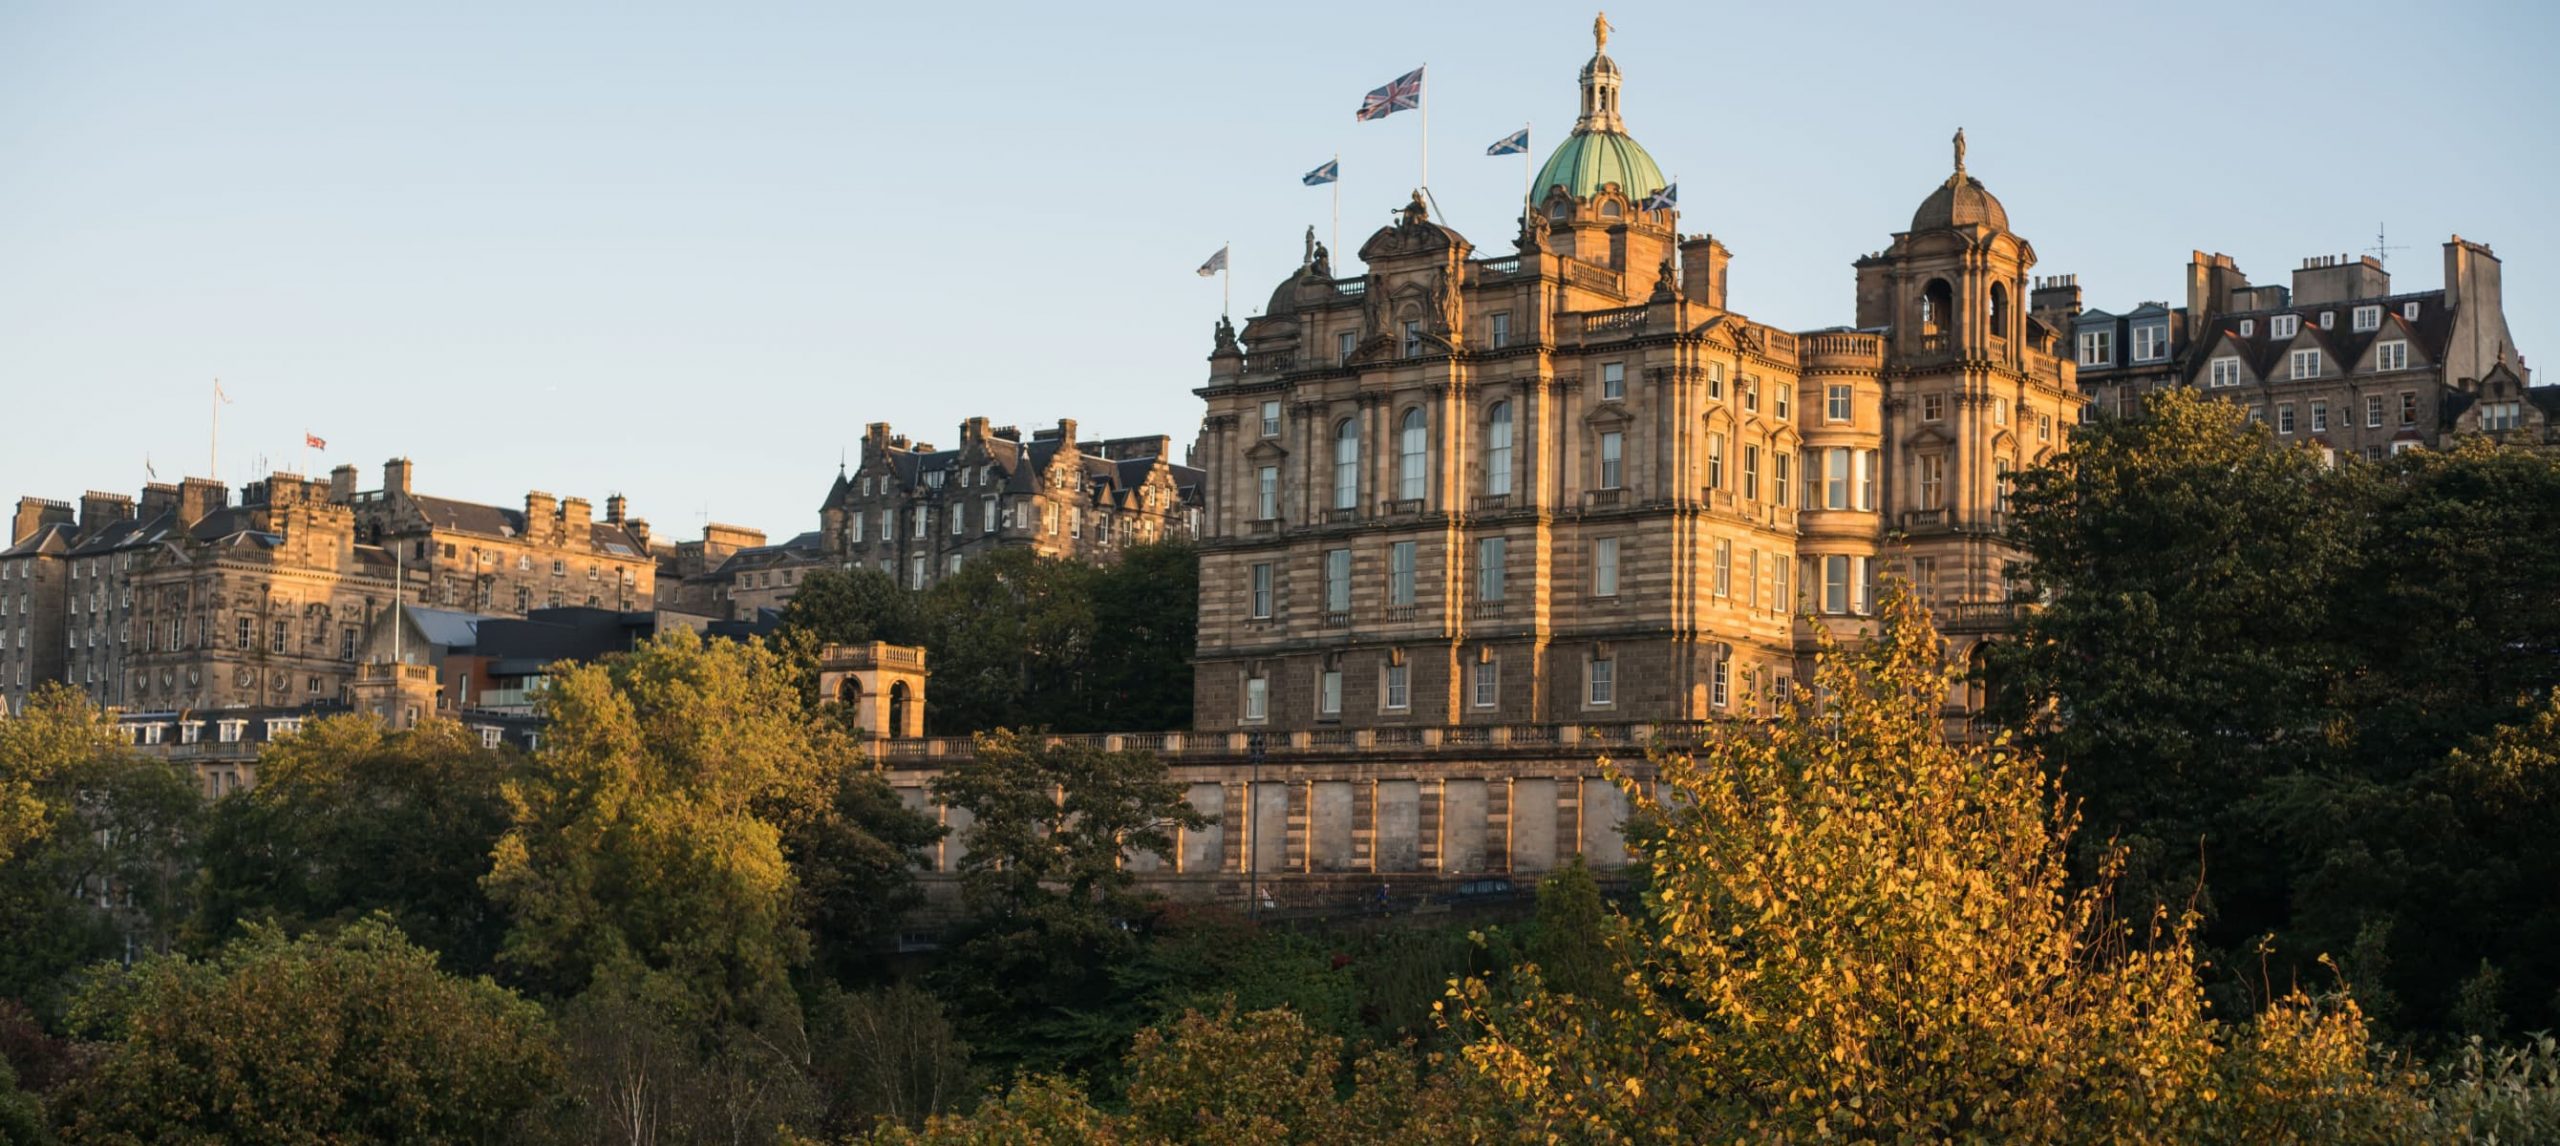 6 Best Edinburgh Hotels